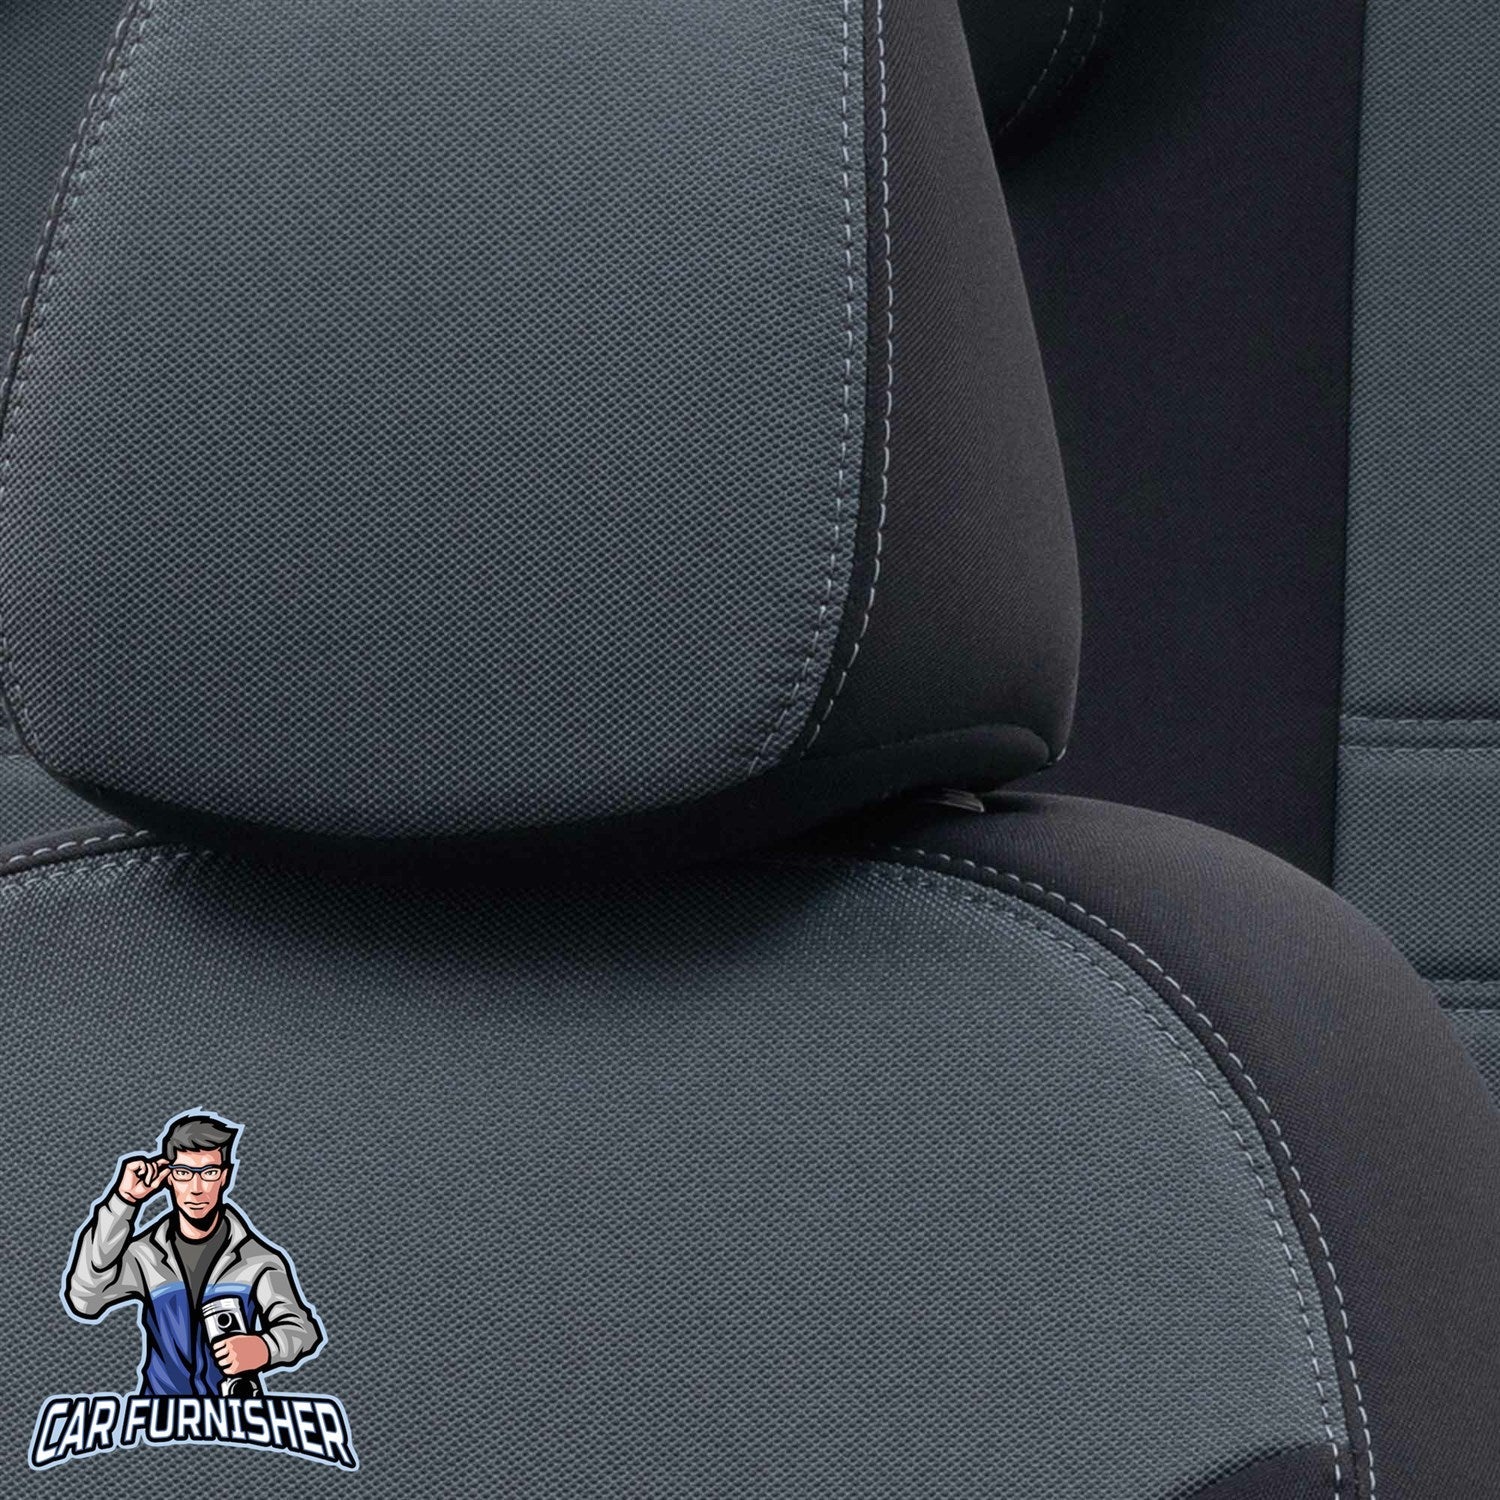 Isuzu Nkr Seat Covers Original Jacquard Design Smoked Black Jacquard Fabric